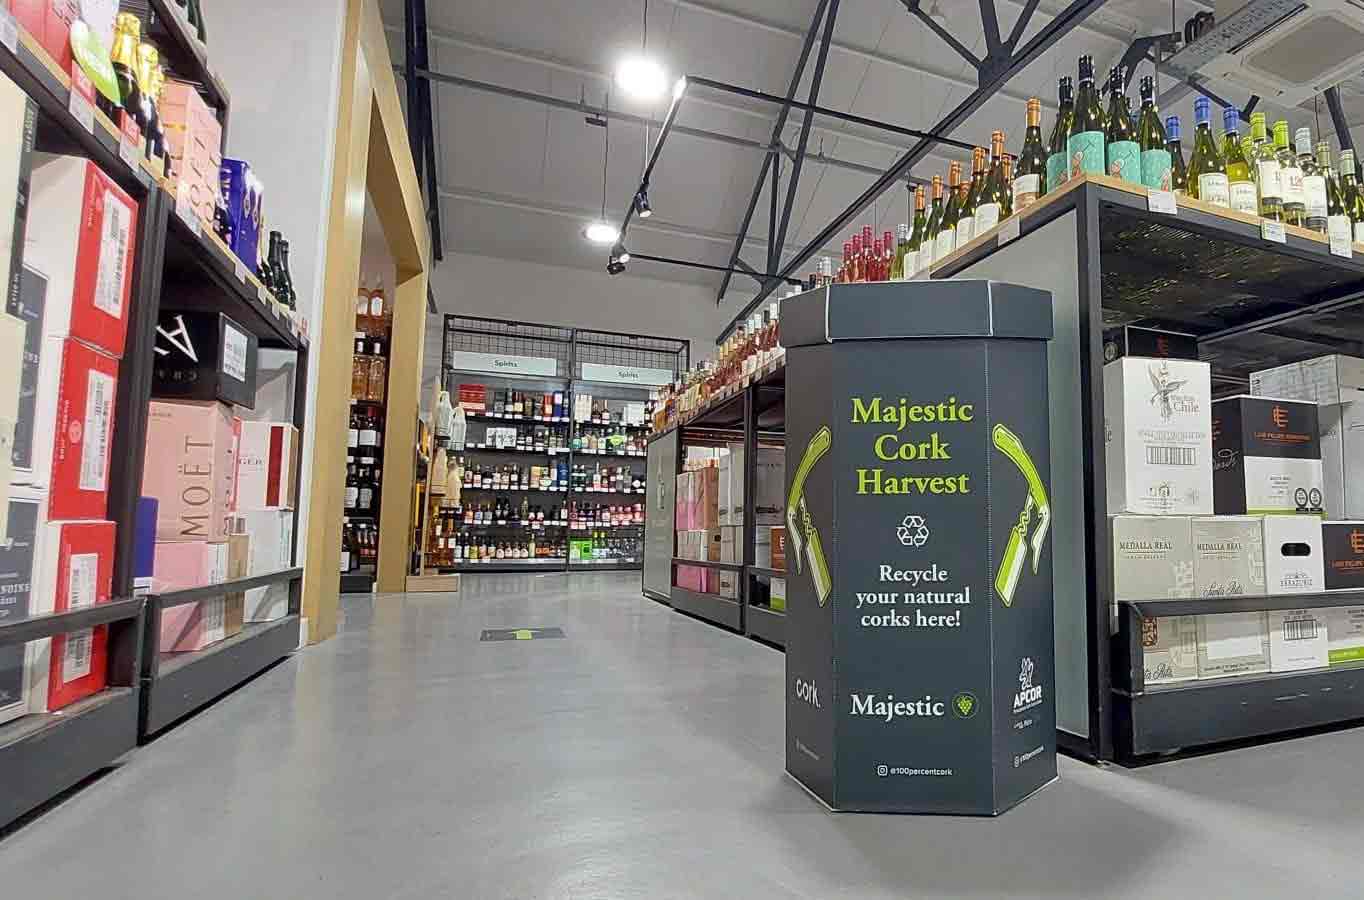 Majestic announces pioneering cork recycling scheme